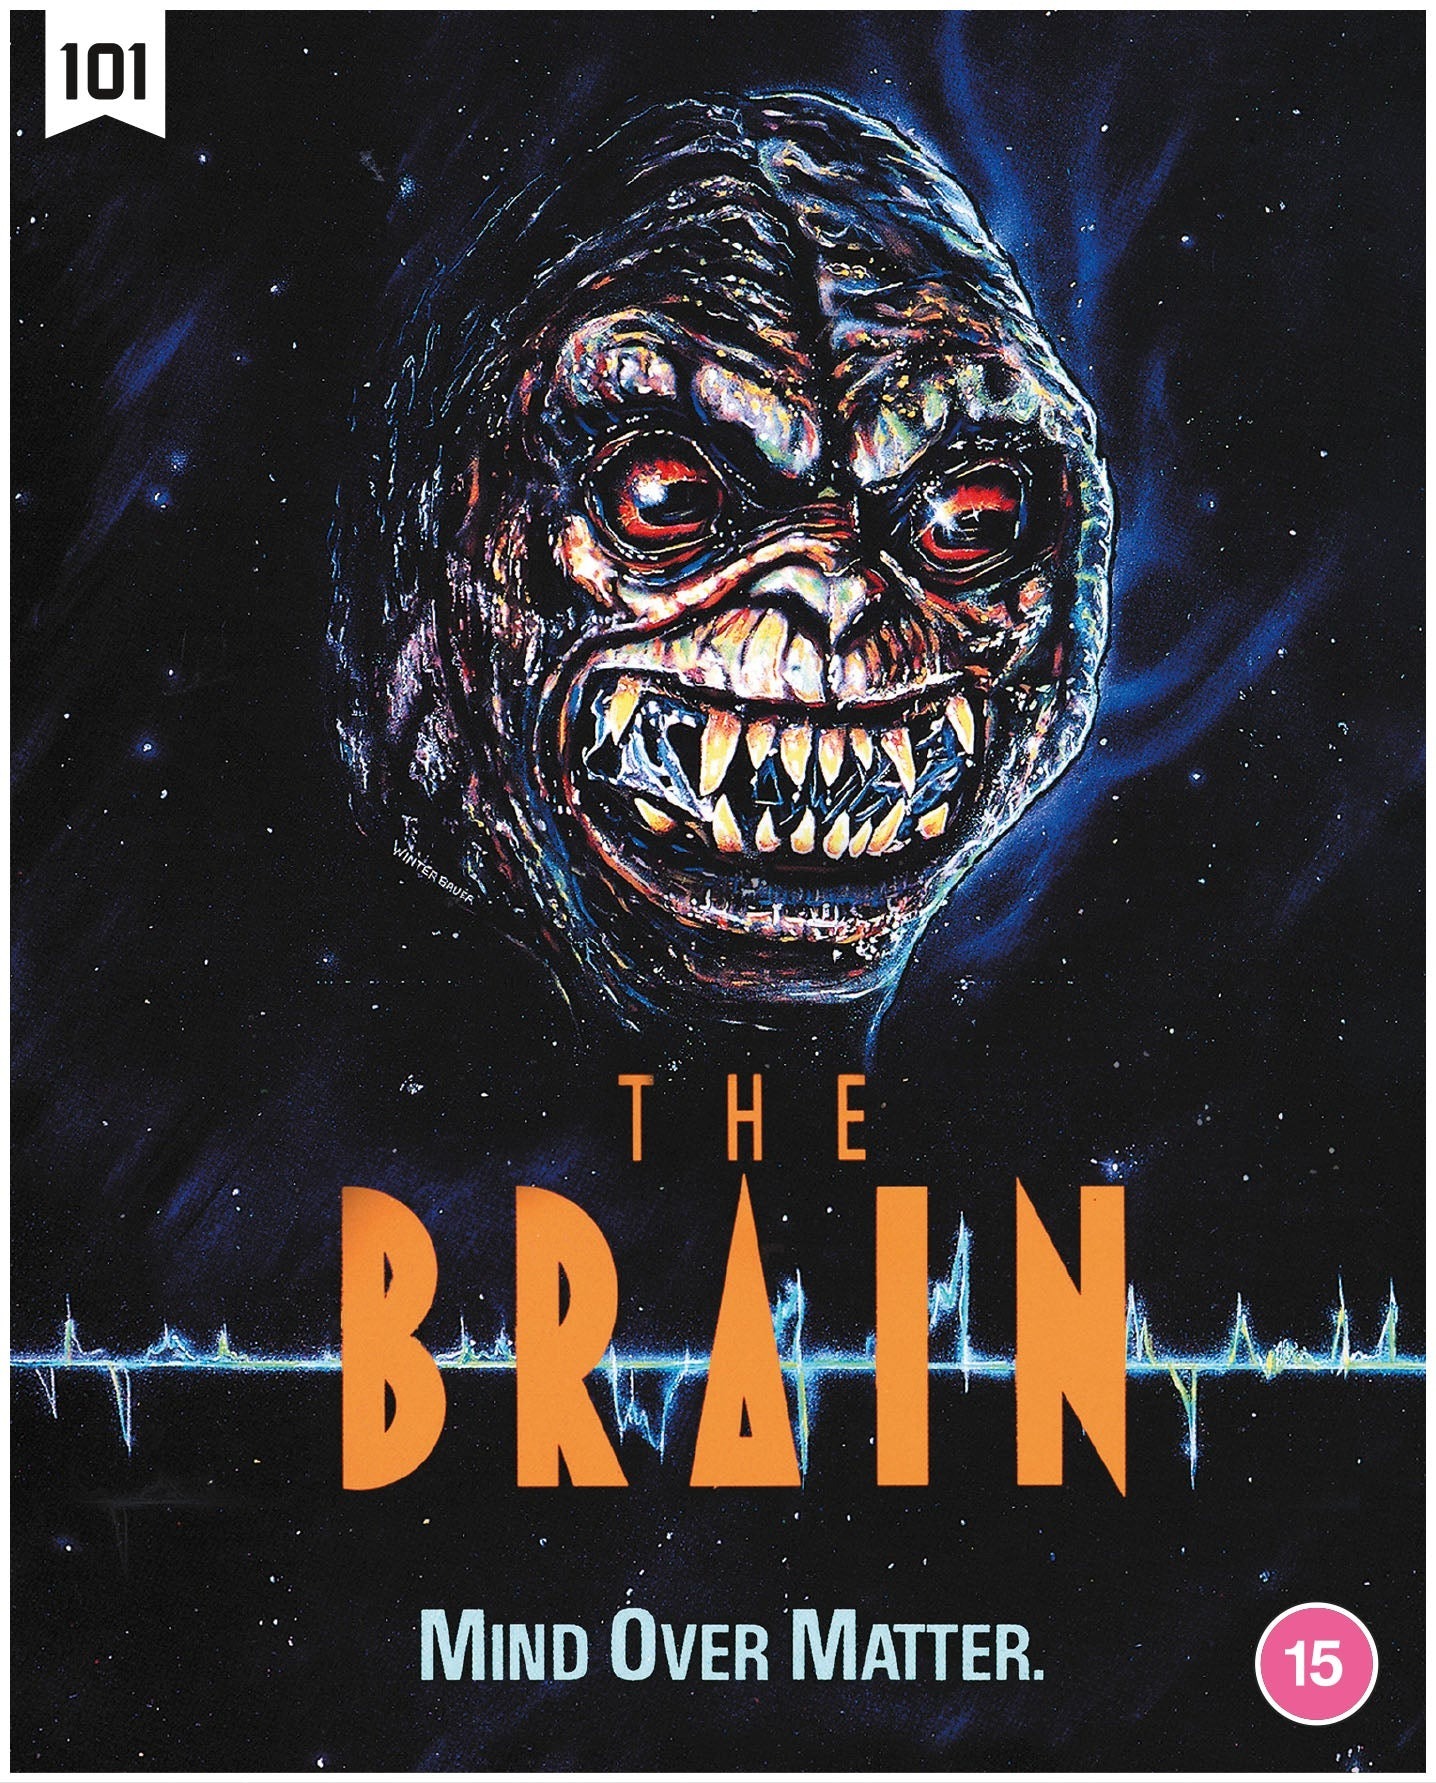 The Brain, 1988, Movie Review, 101 Films, Black Label # 27, Horror